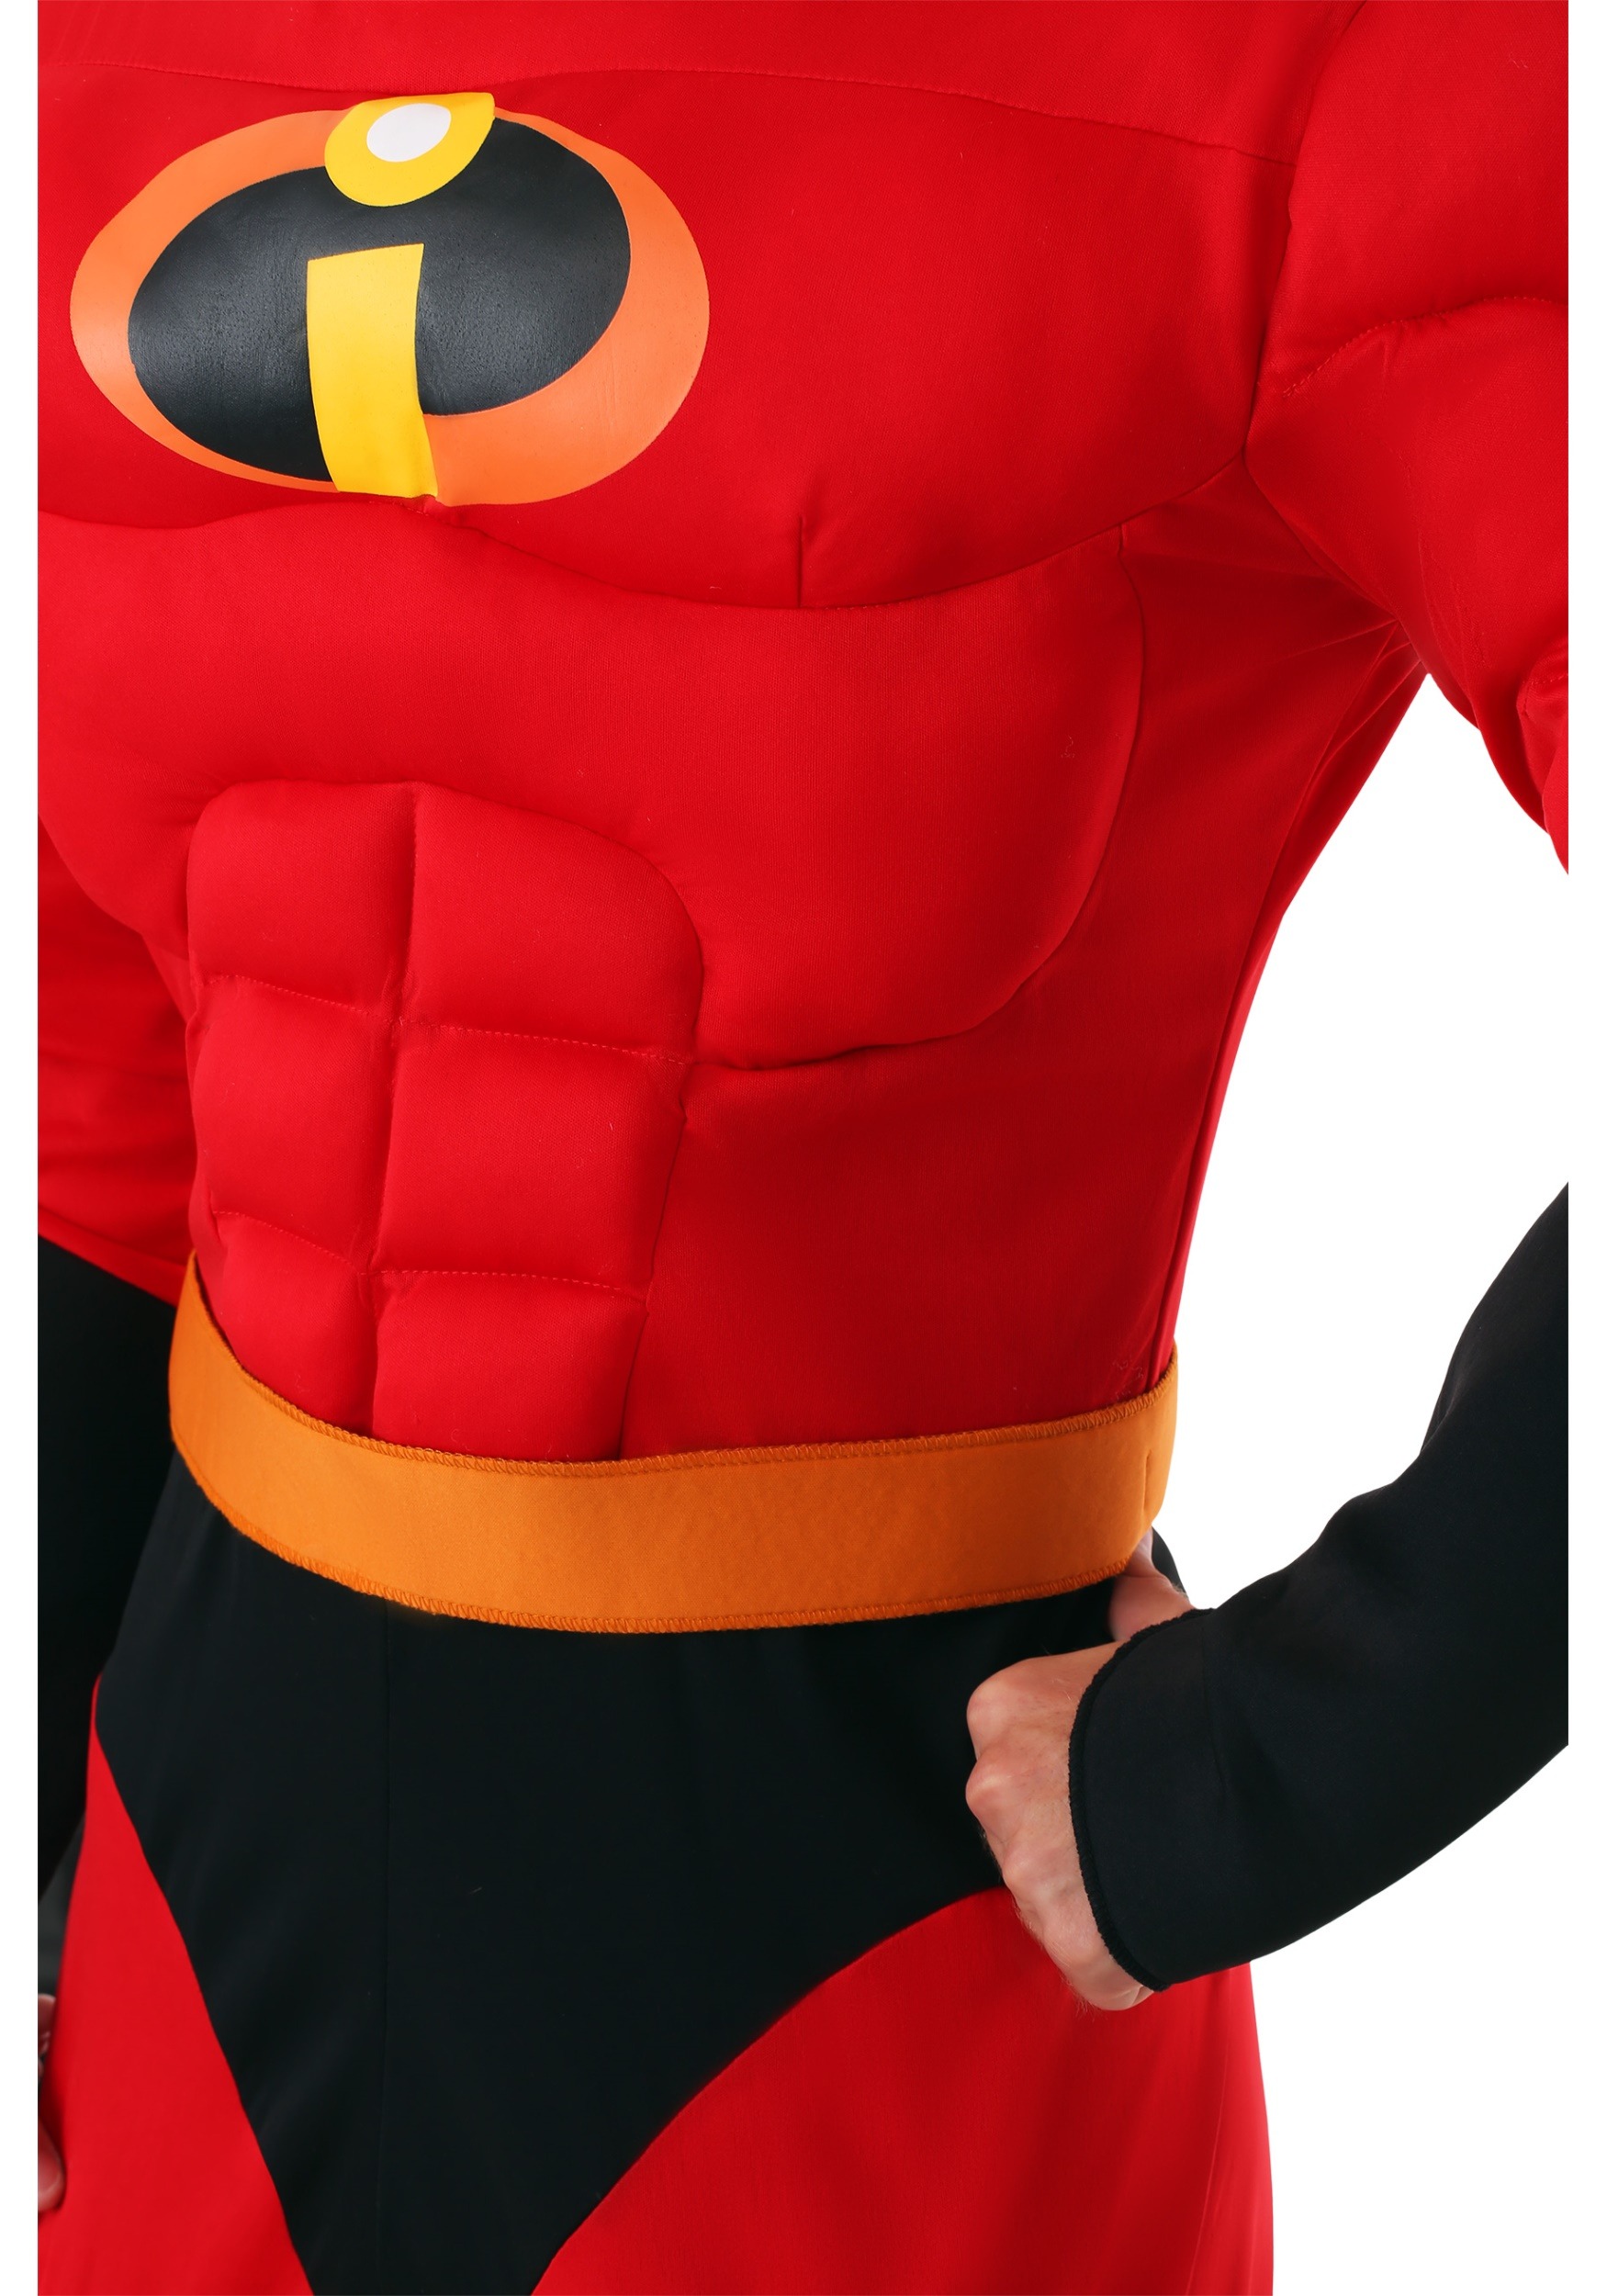 Respetuoso Estadístico referencia Men's Super Mr. Incredible Costume from The Incredibles